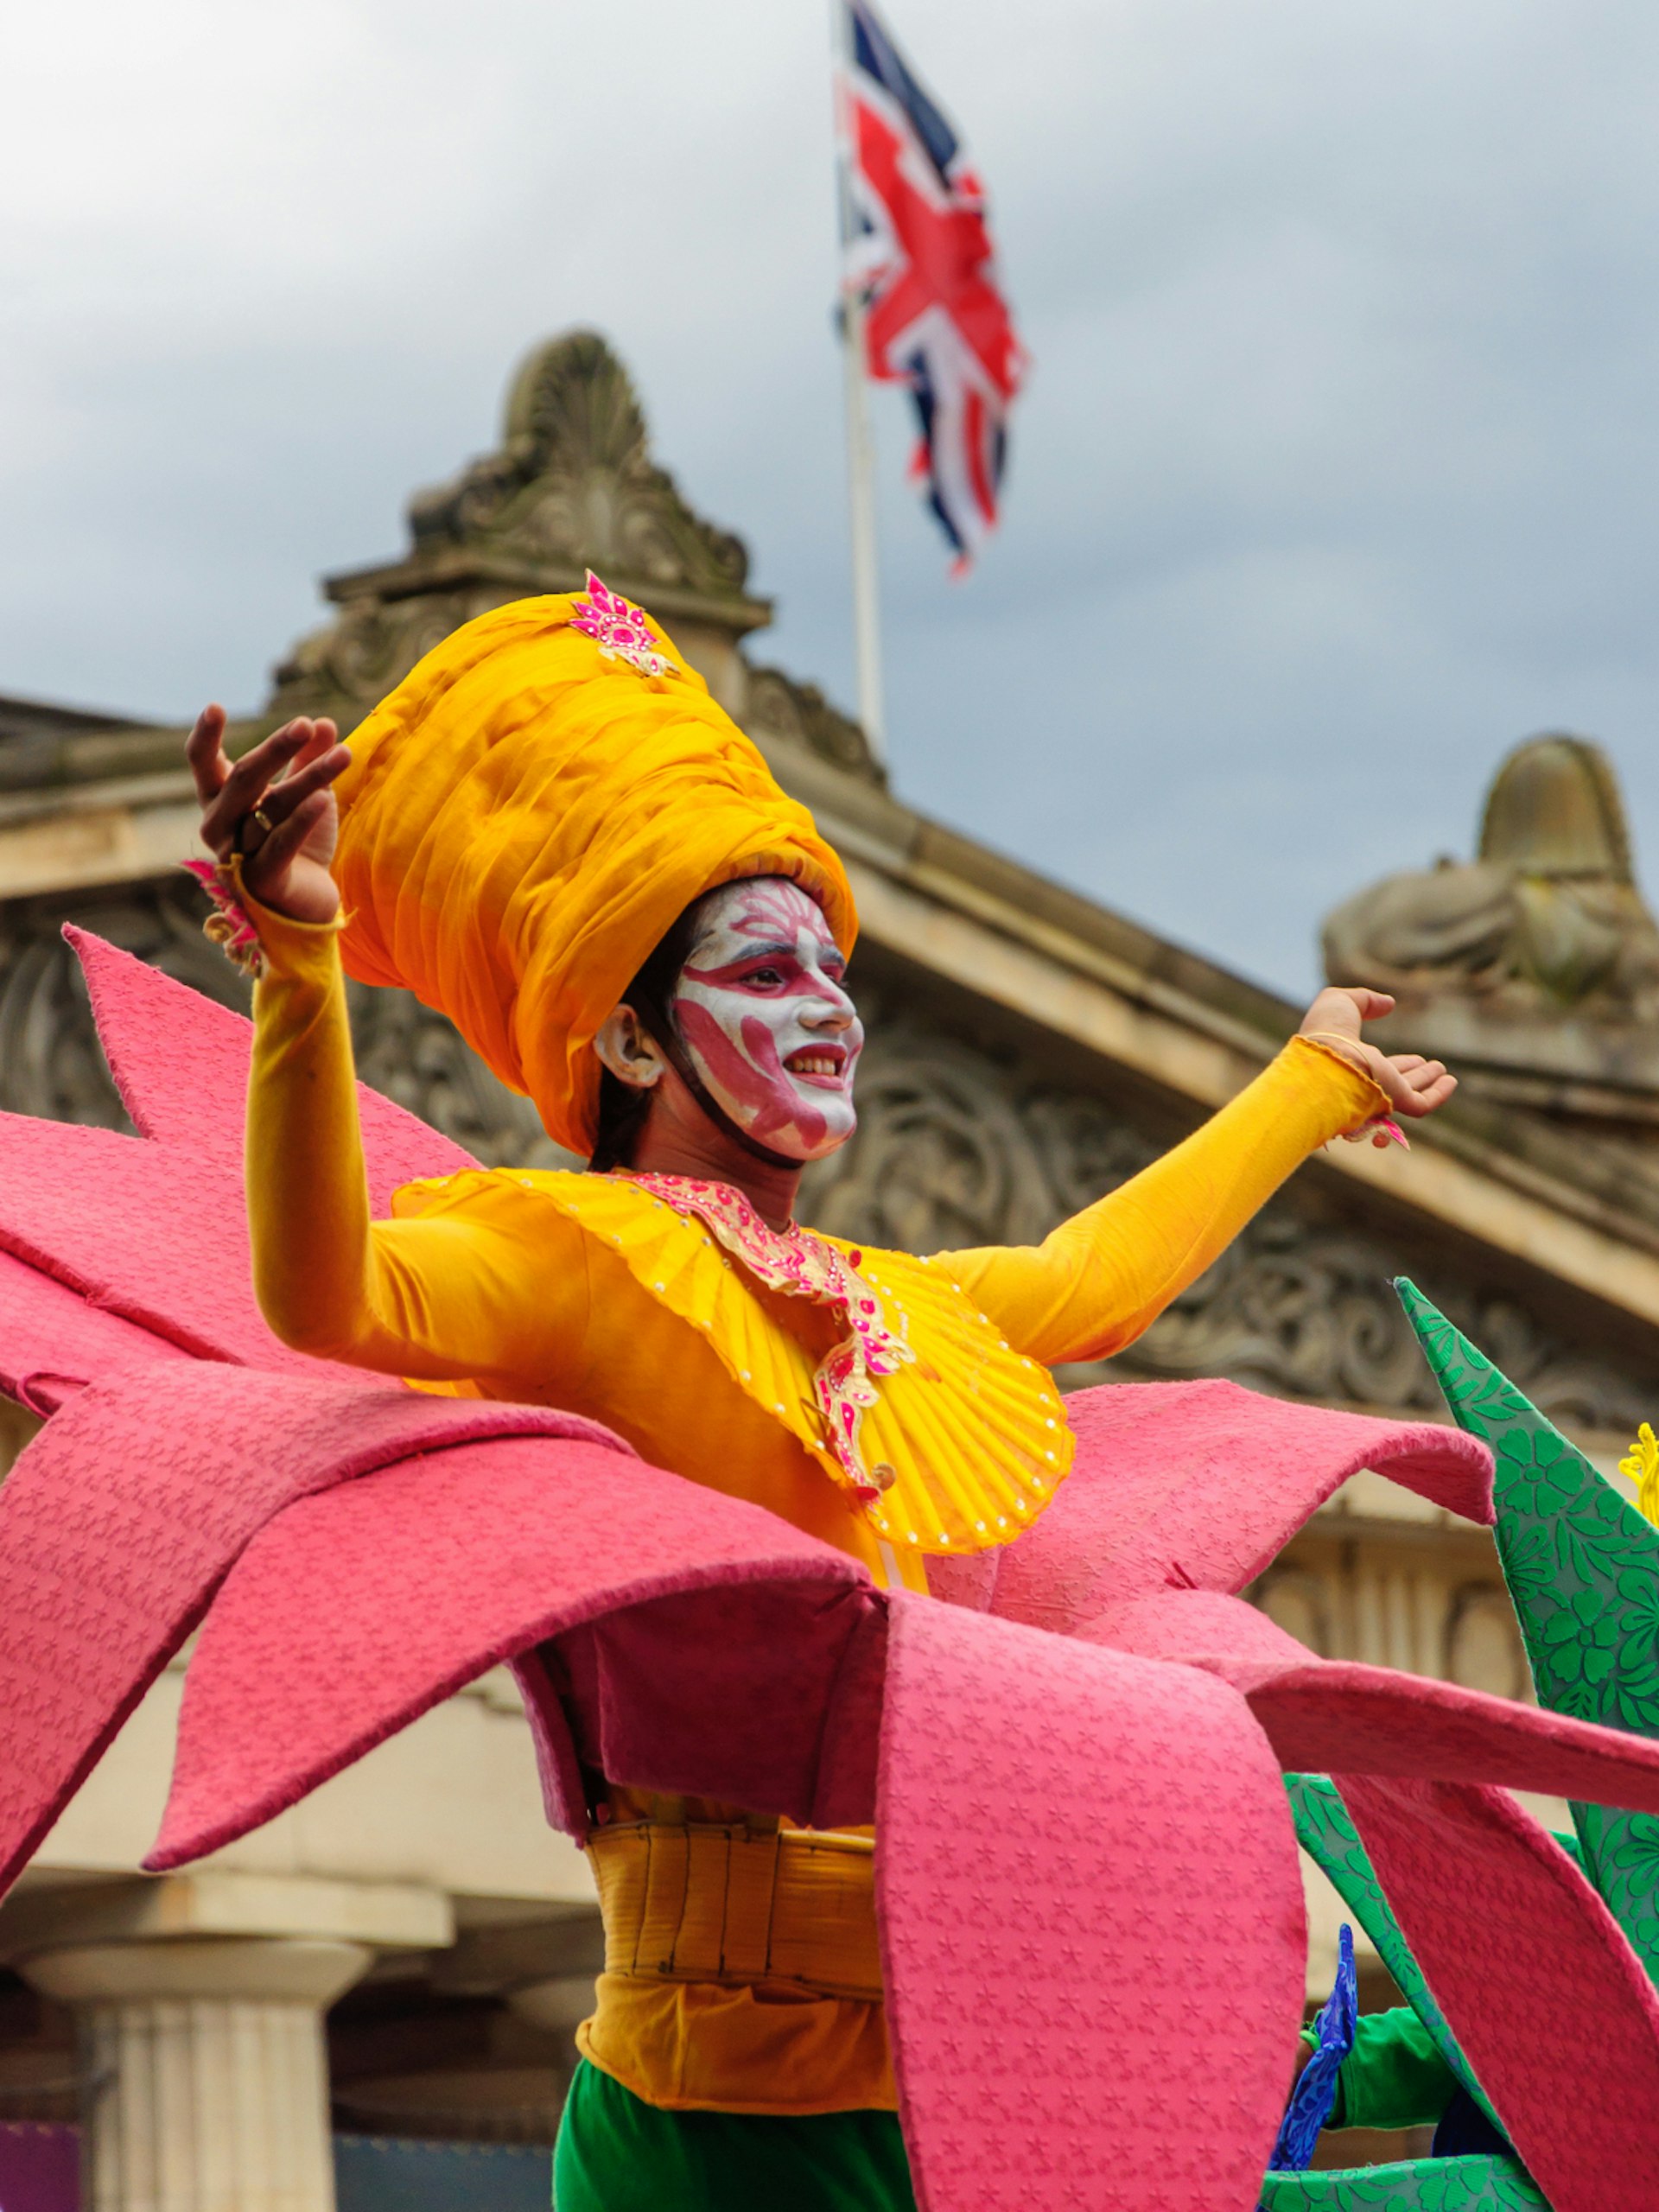 Participant in the Edinburgh Jazz & Blues Festival carnival parade © Skully / Shutterstock